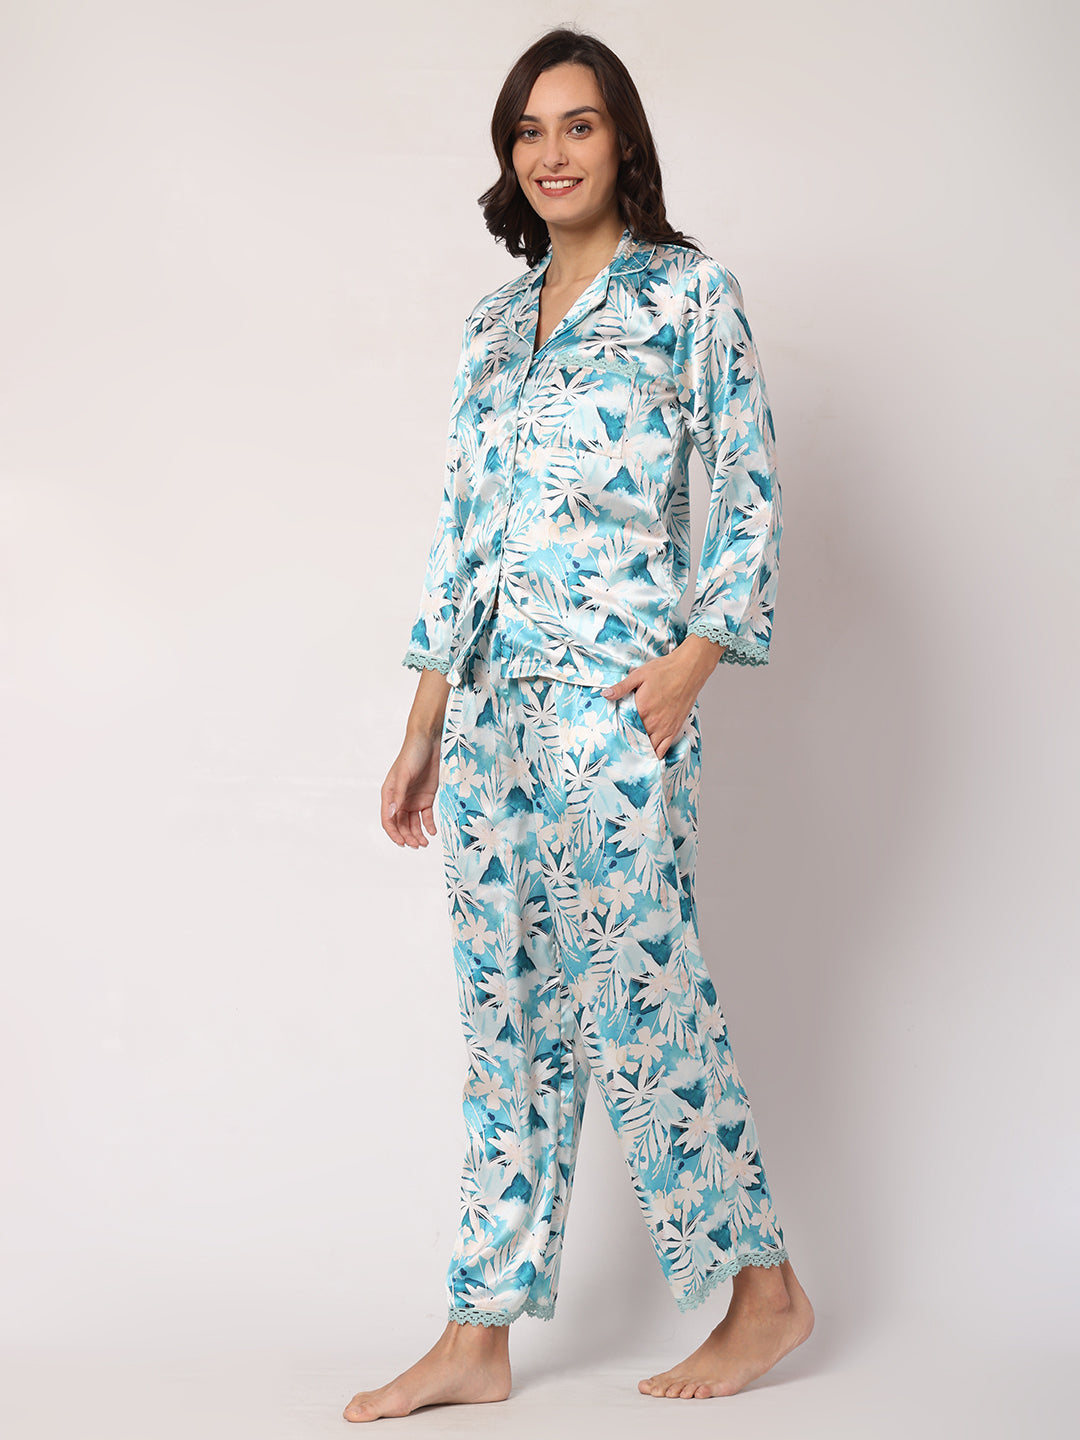 GOCHIKKO Women's Satin Printed Color Night Suit Set of Shirt & Pyjama Pack of 1(Macaw Blue Printed)